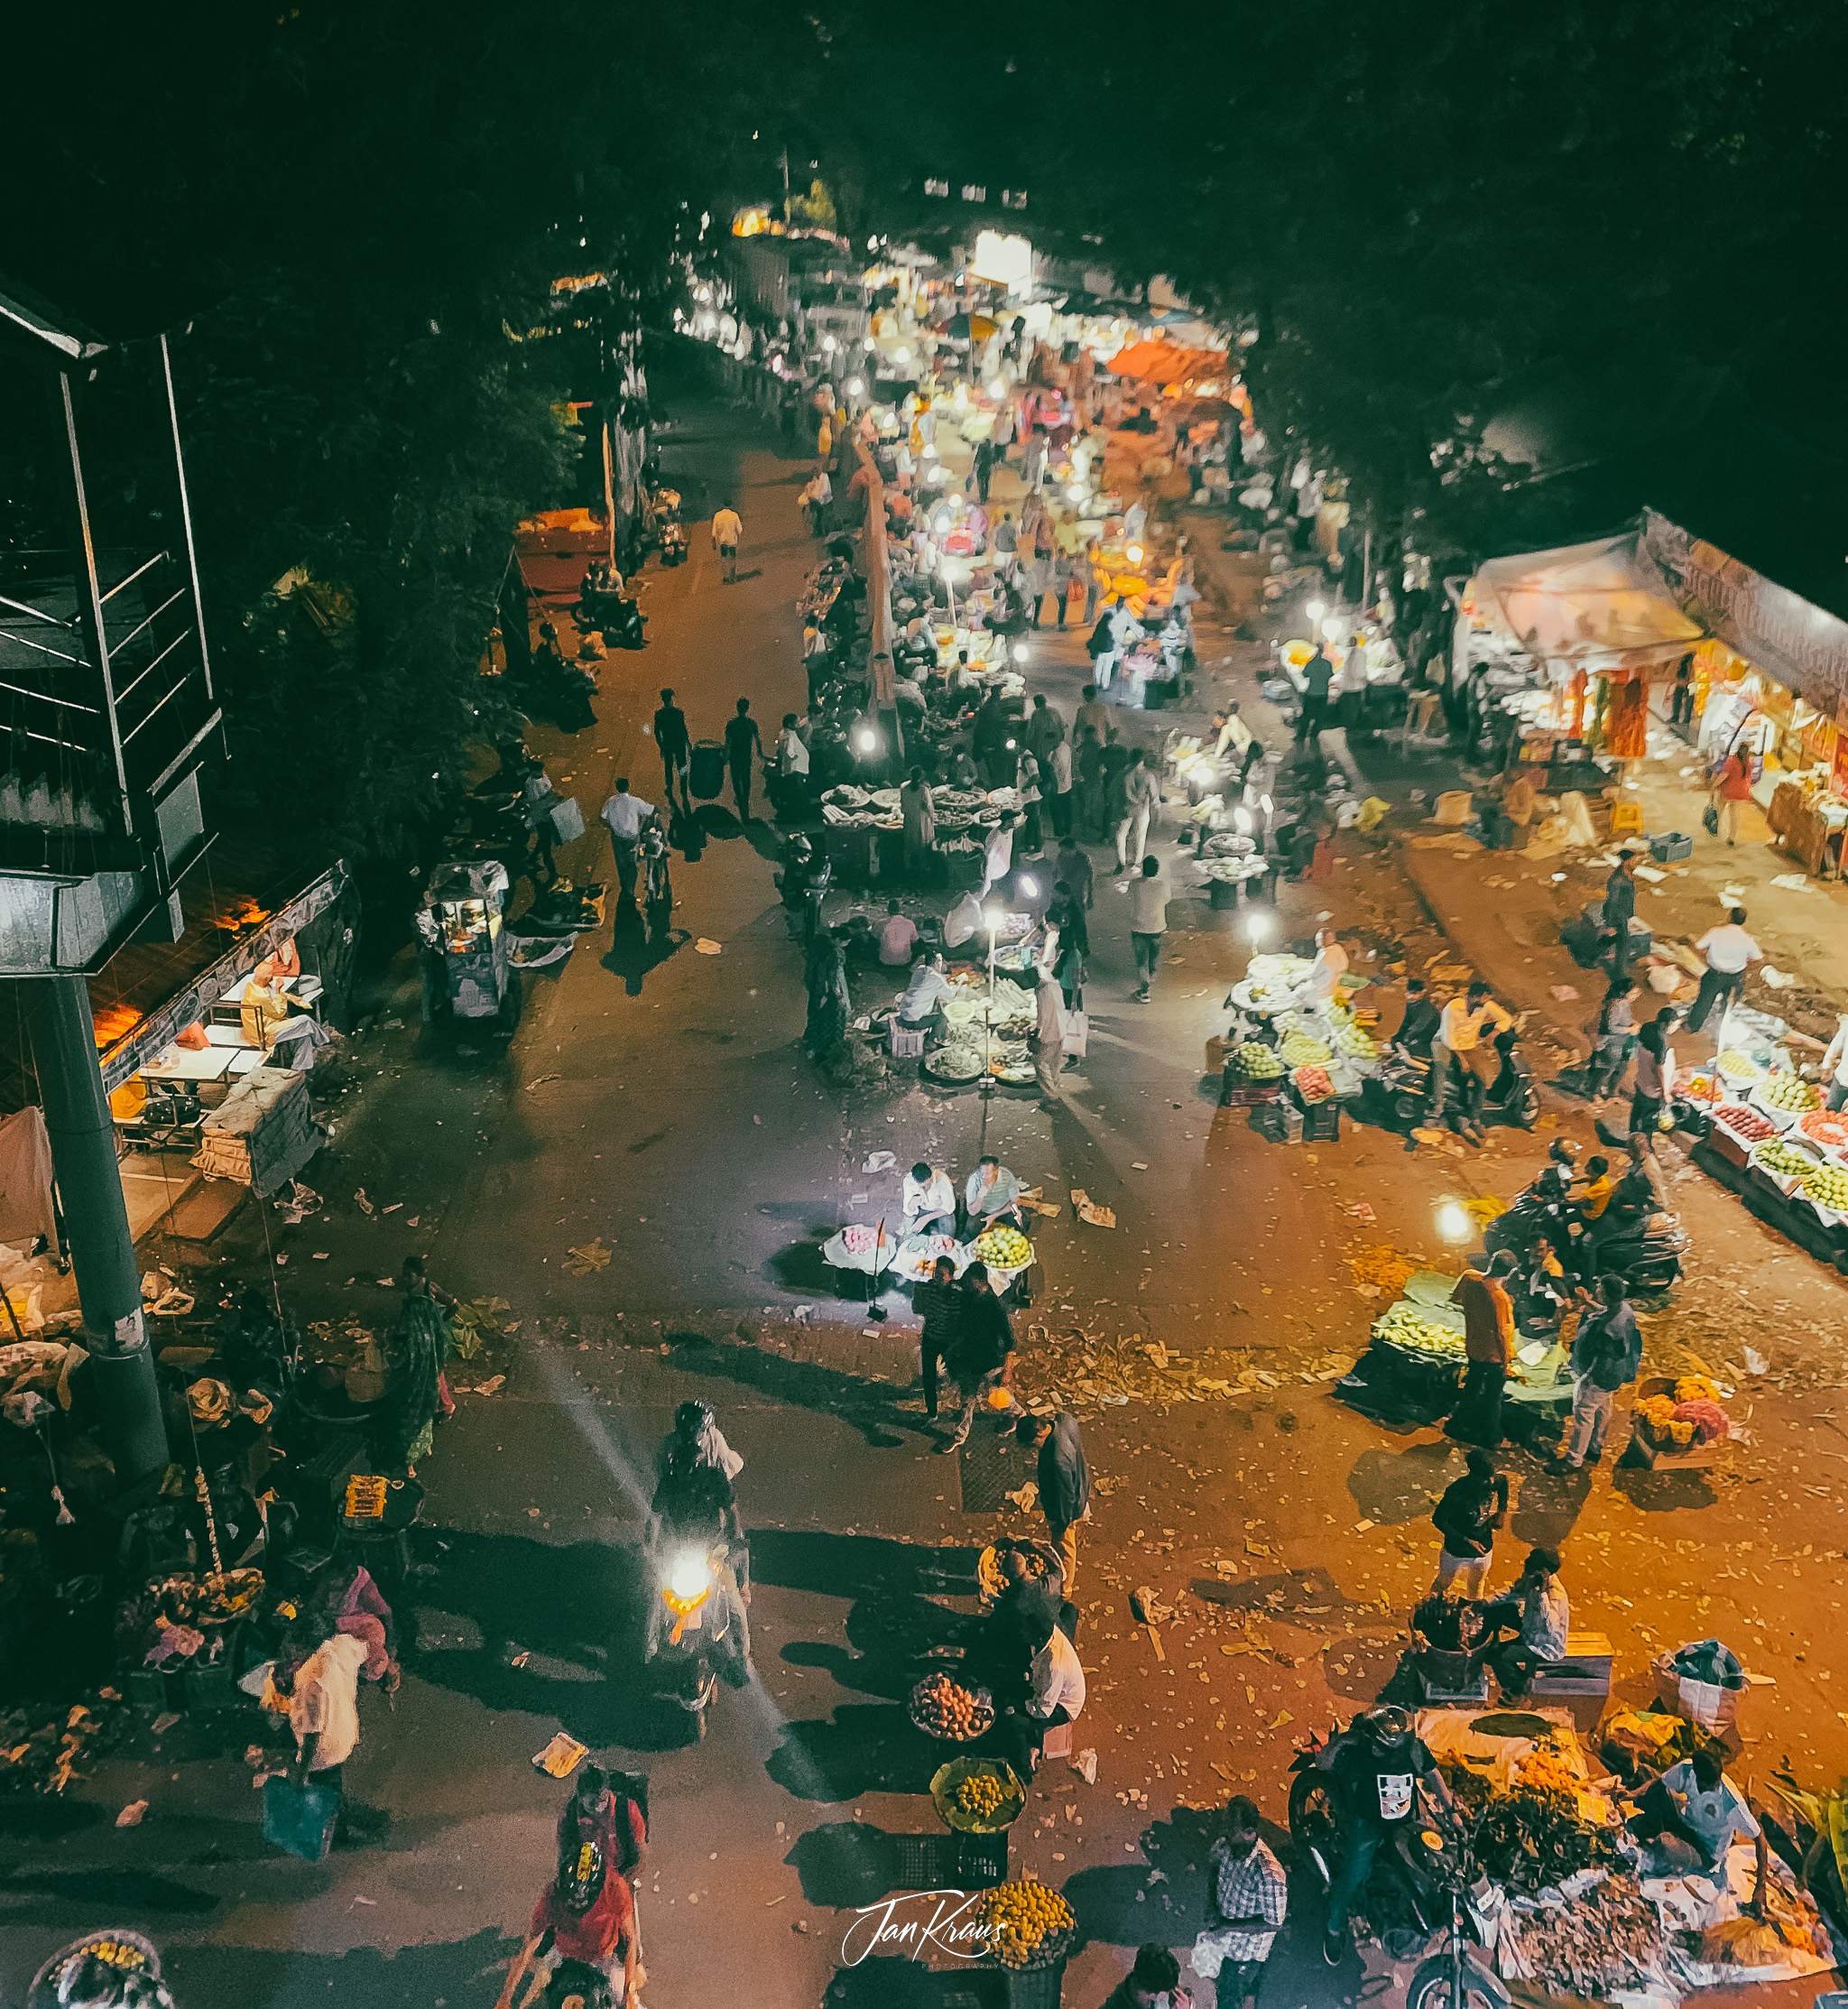 A night view of market street, Mumbai, India